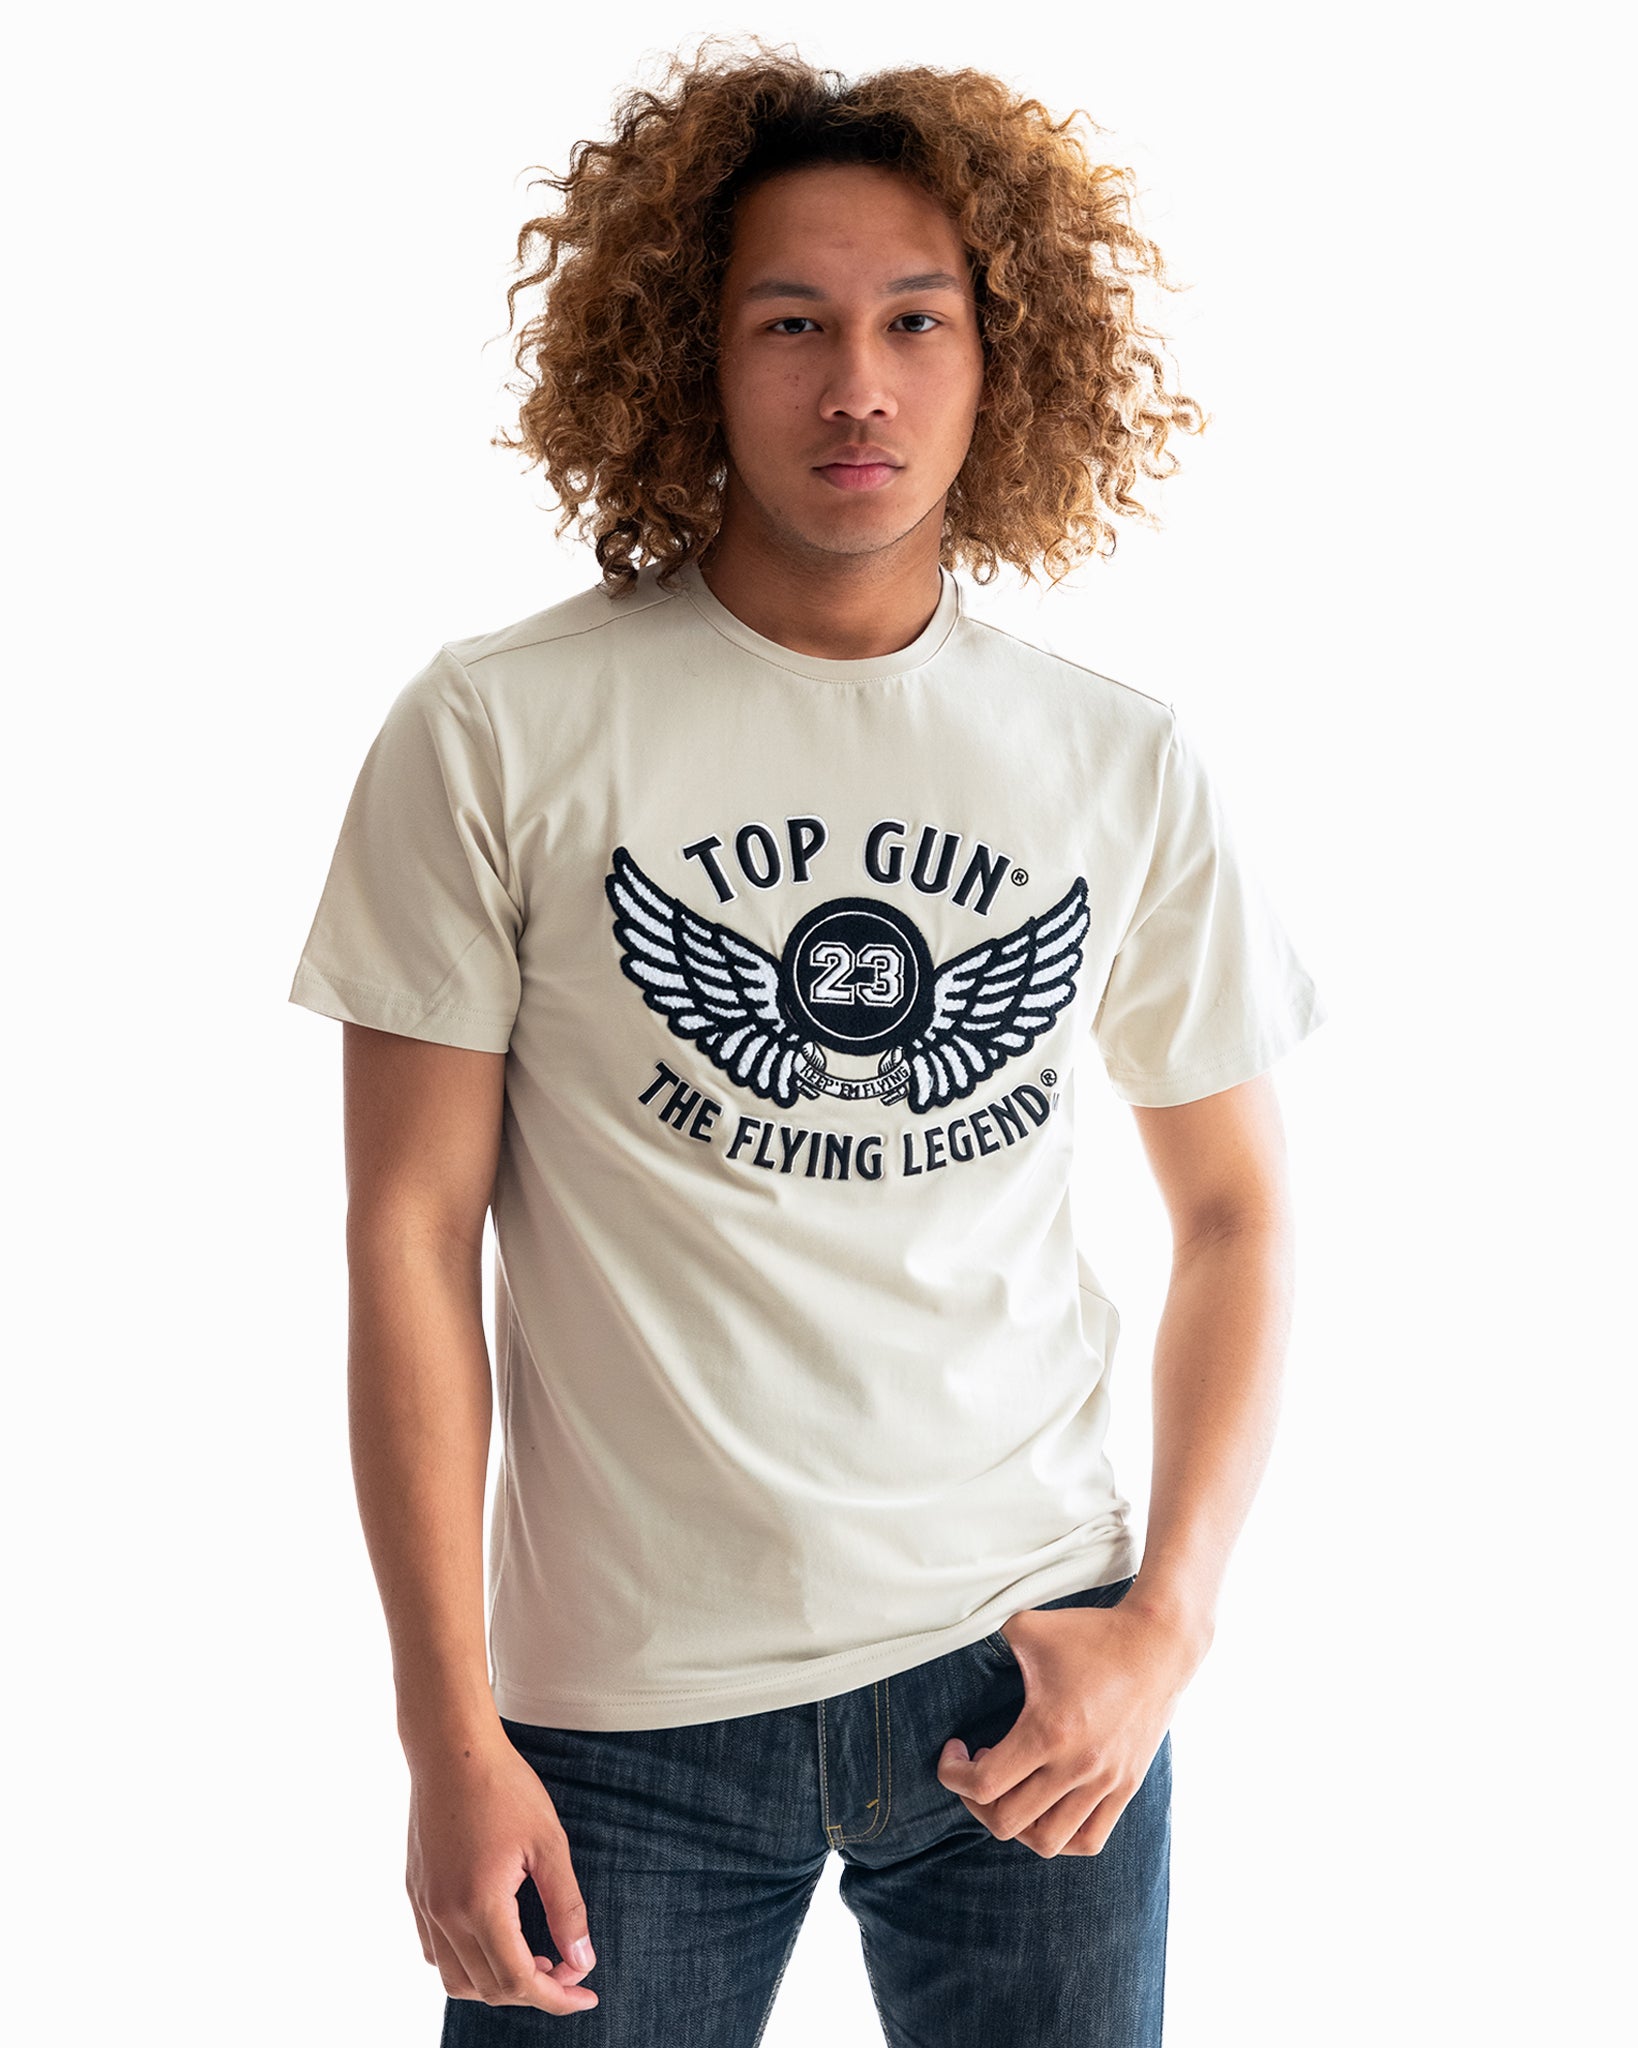 STORE gun top | Men\'s OFFICIAL Top merchandise, Best Tees Tees & T-Shirts TOP movie Store THE – Cotton T-Shirts, Tees, GUN Summer Men\'s Gun |